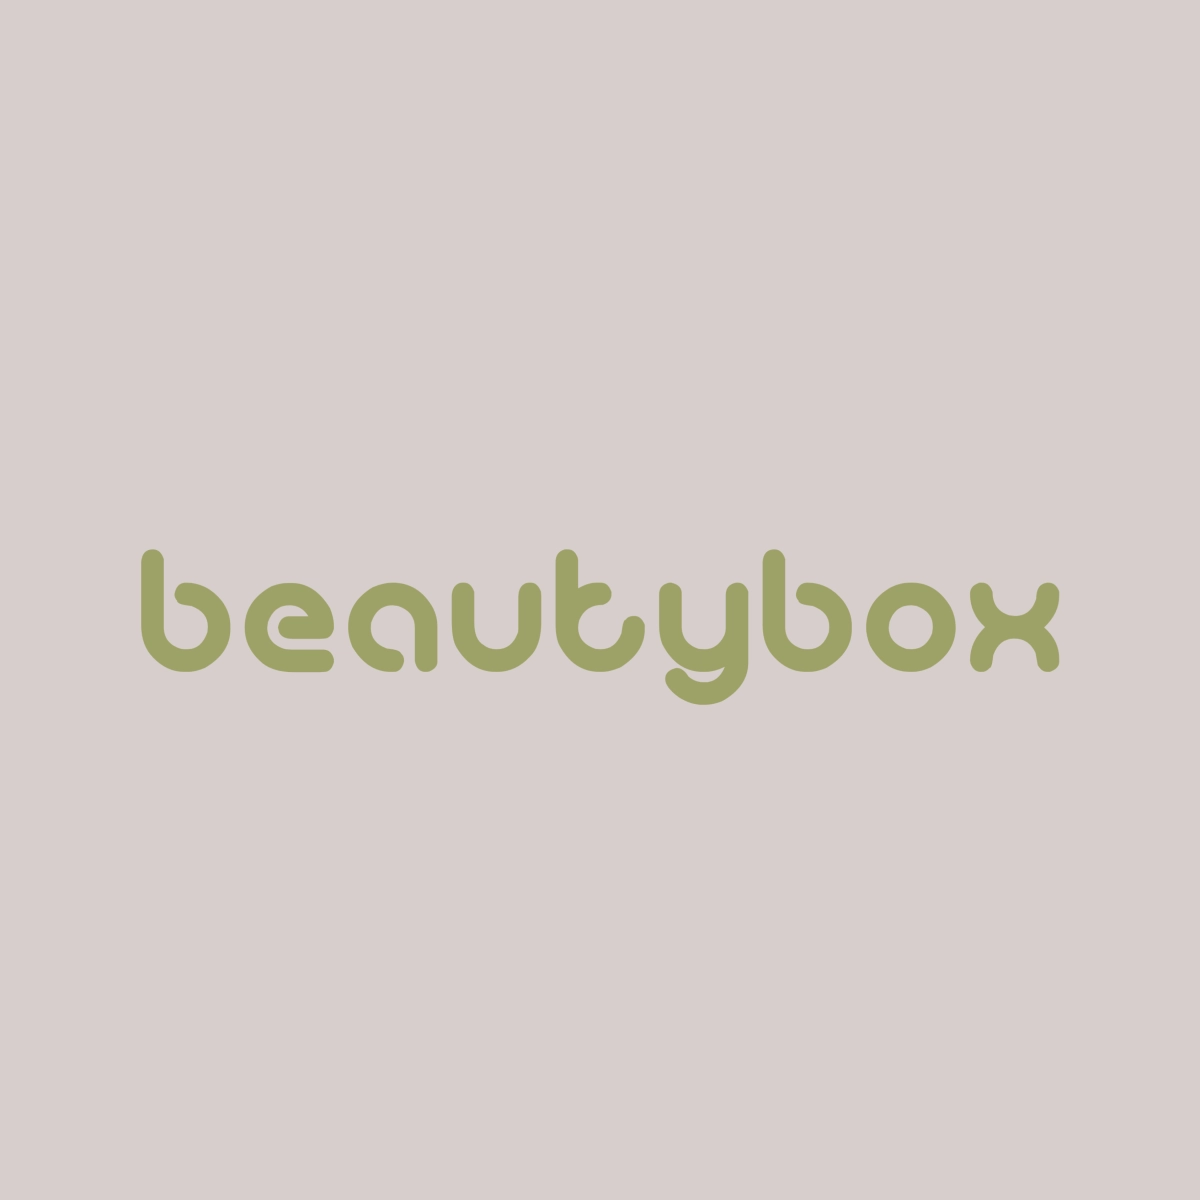 BeautyBox Opensolarium Hintergrund